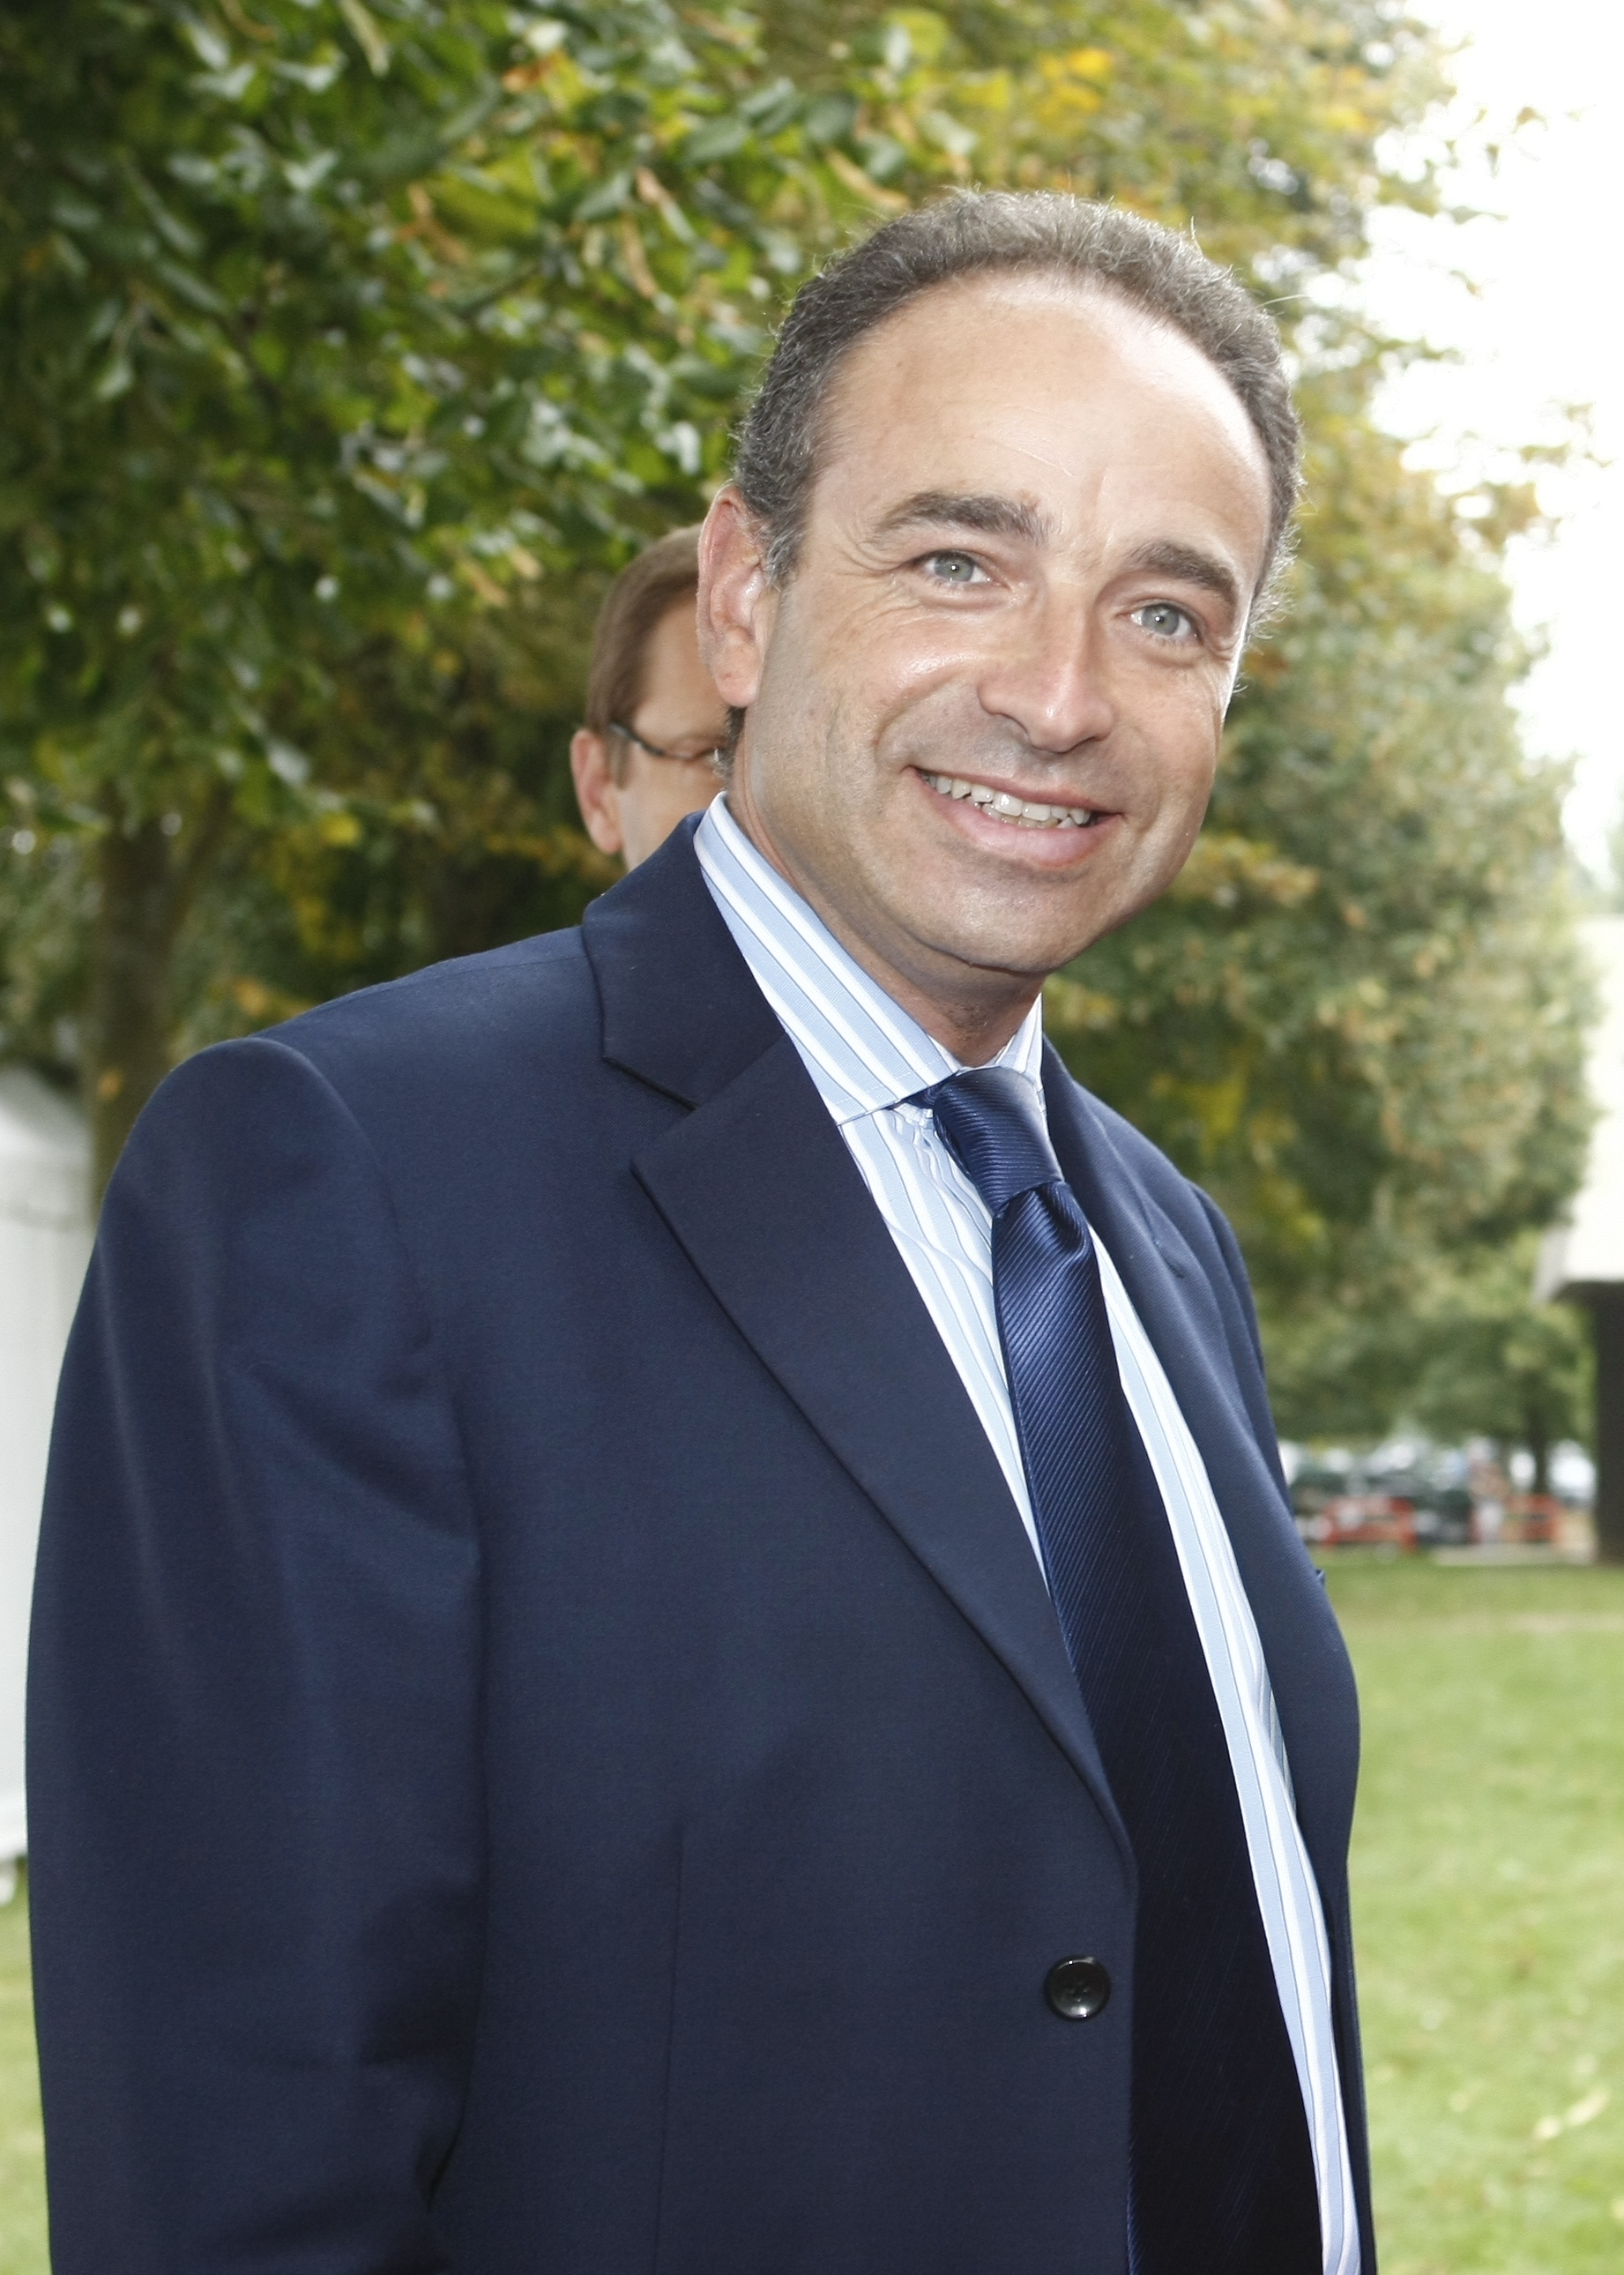 File:Jean-François Copé.jpg - Wikimedia Commons